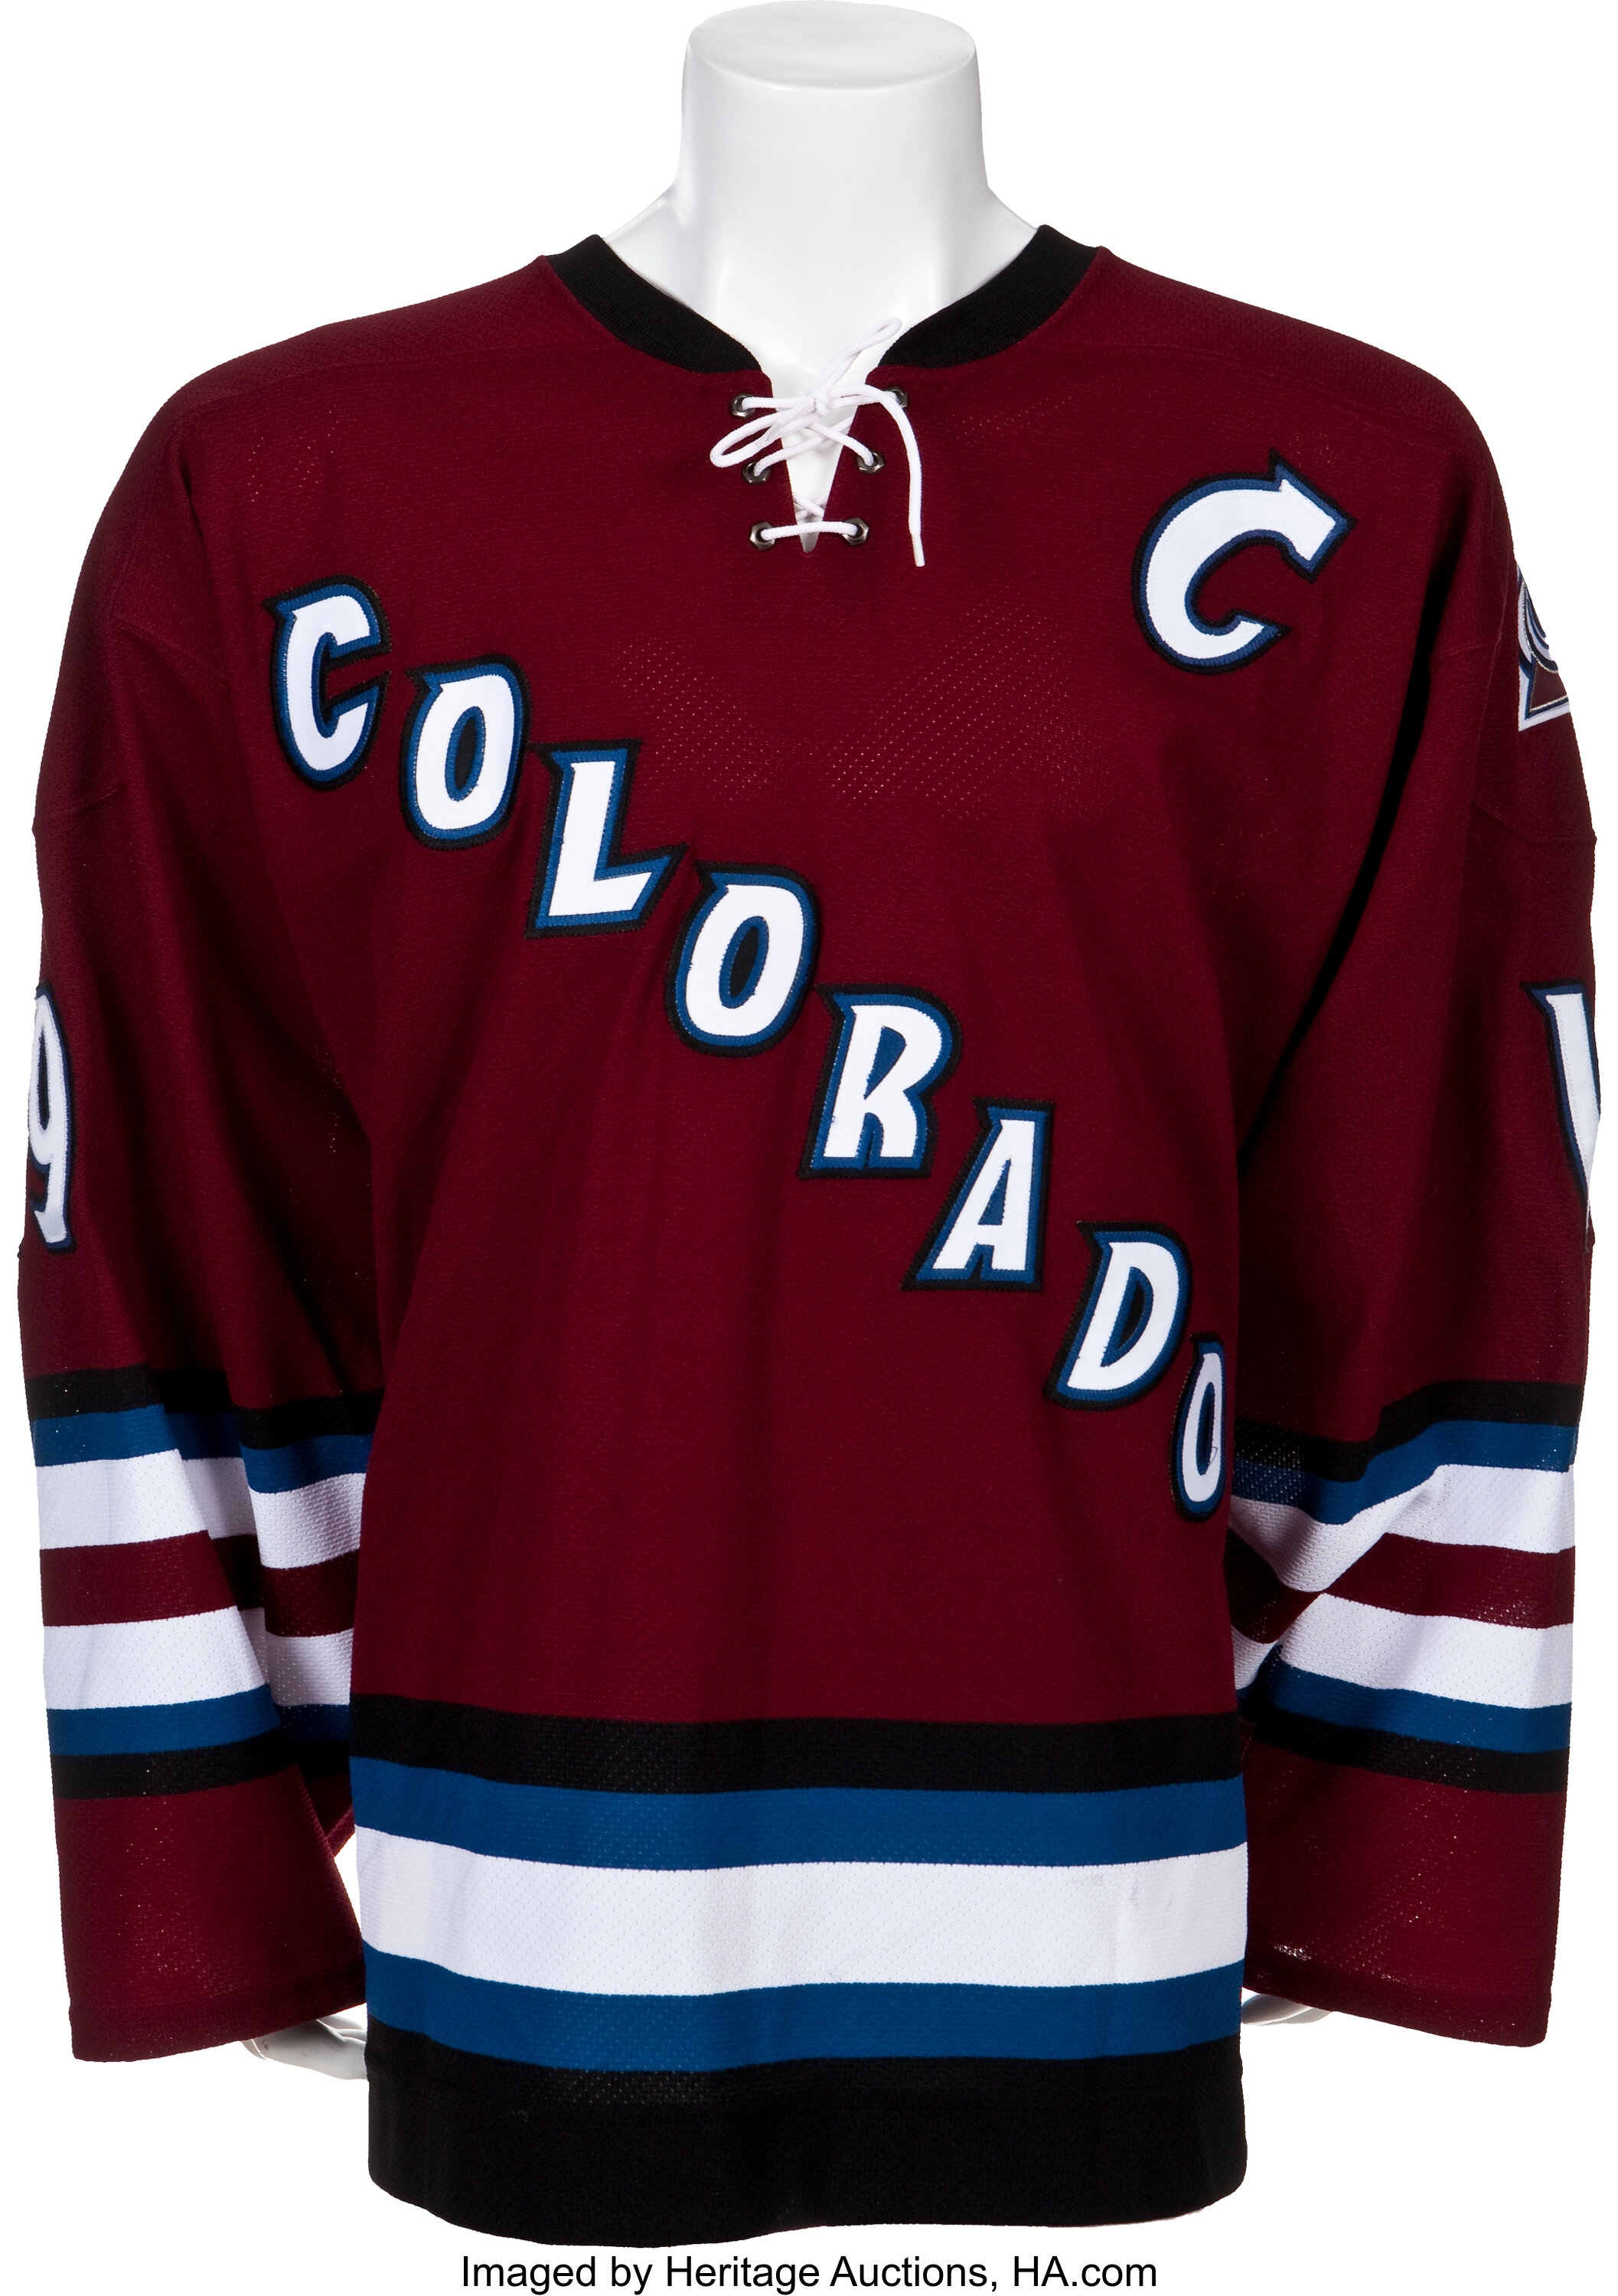 colorado avalanche jersey history - Google Search  Nhl hockey jerseys, Colorado  avalanche, Hockey jersey